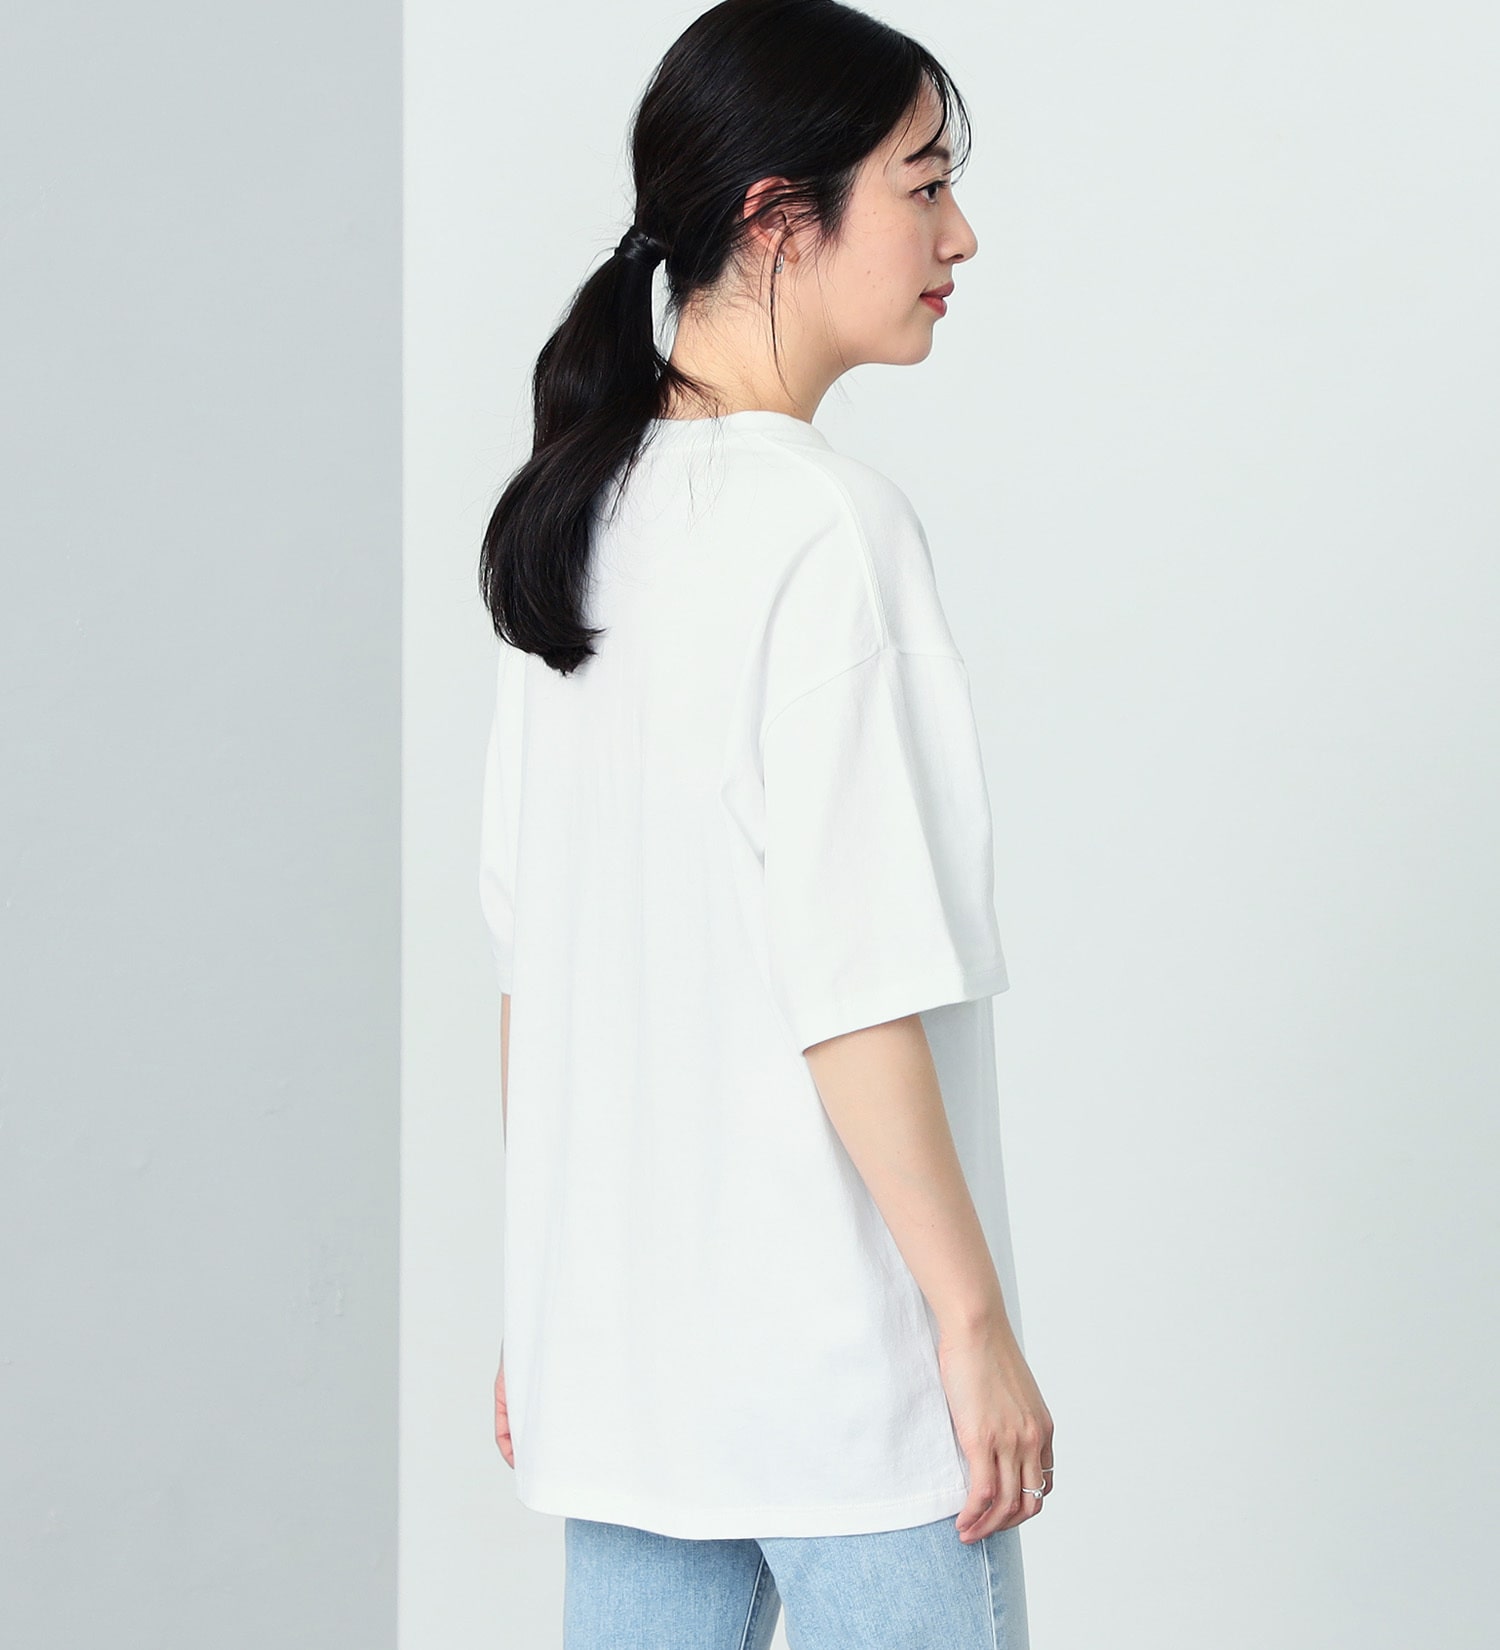 SOMETHING(サムシング)の【おまとめ割対象】SOMETHING TOKYO SOMEGIRLS 半袖Tシャツ|トップス/Tシャツ/カットソー/レディース|ホワイト